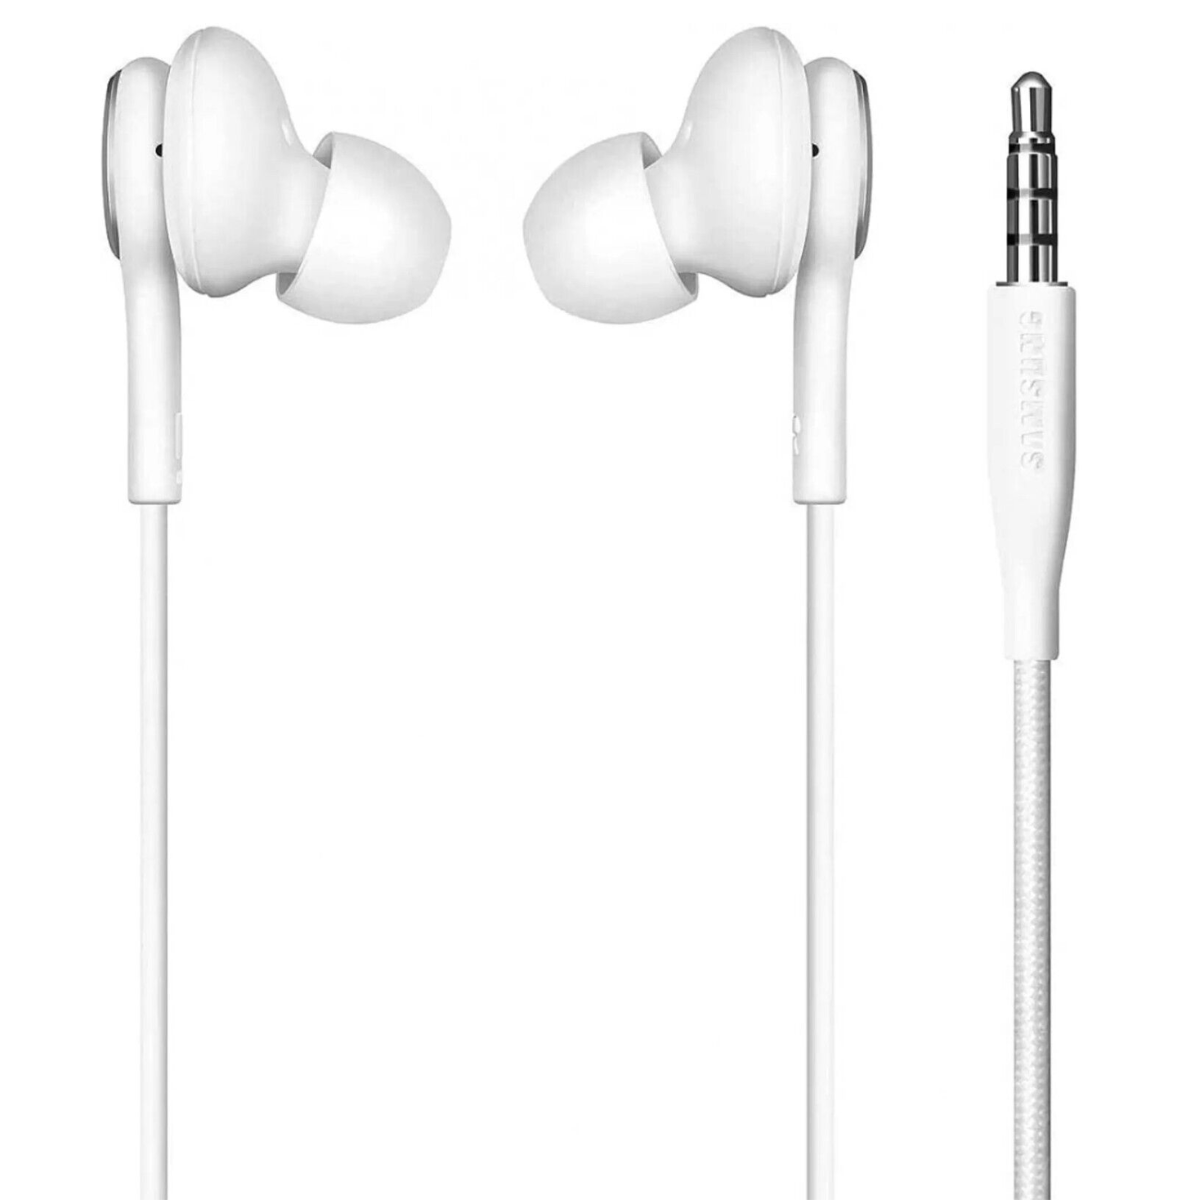 Headset Samsung AUX S7 In-ear 3,5mm Weiß Kopfhörer SAMSUNG S4 Klinke S6 S5 AKG Kopfhörer Original Galaxy Note,